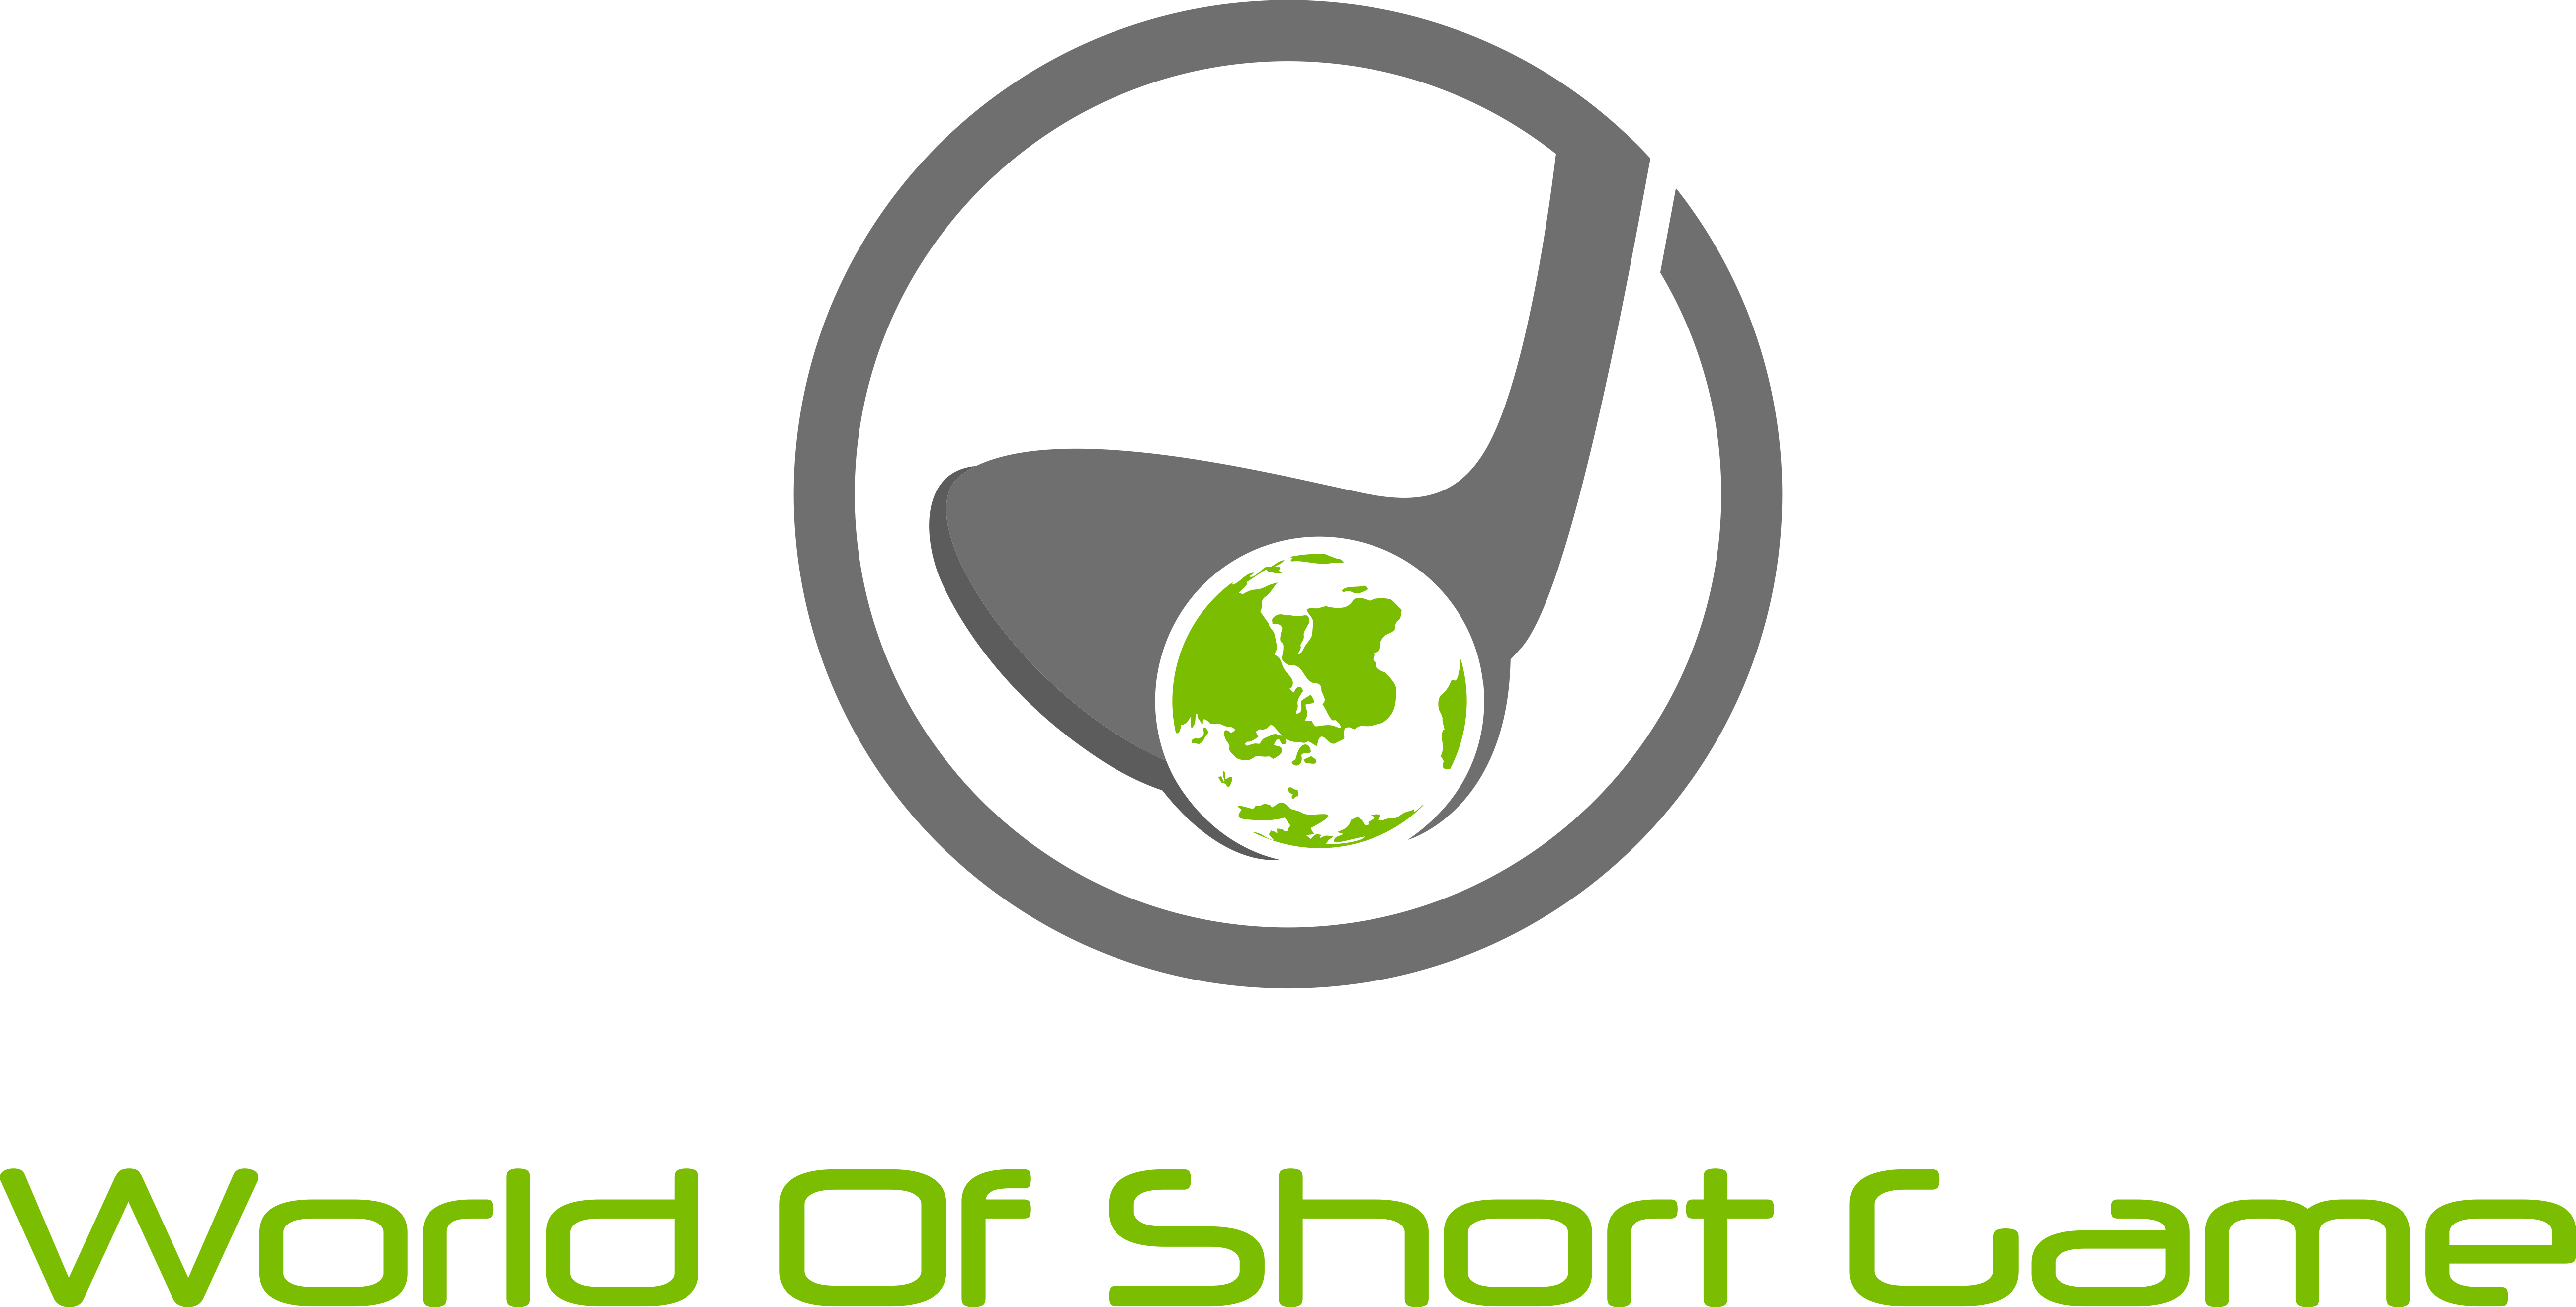 World Of Short Game